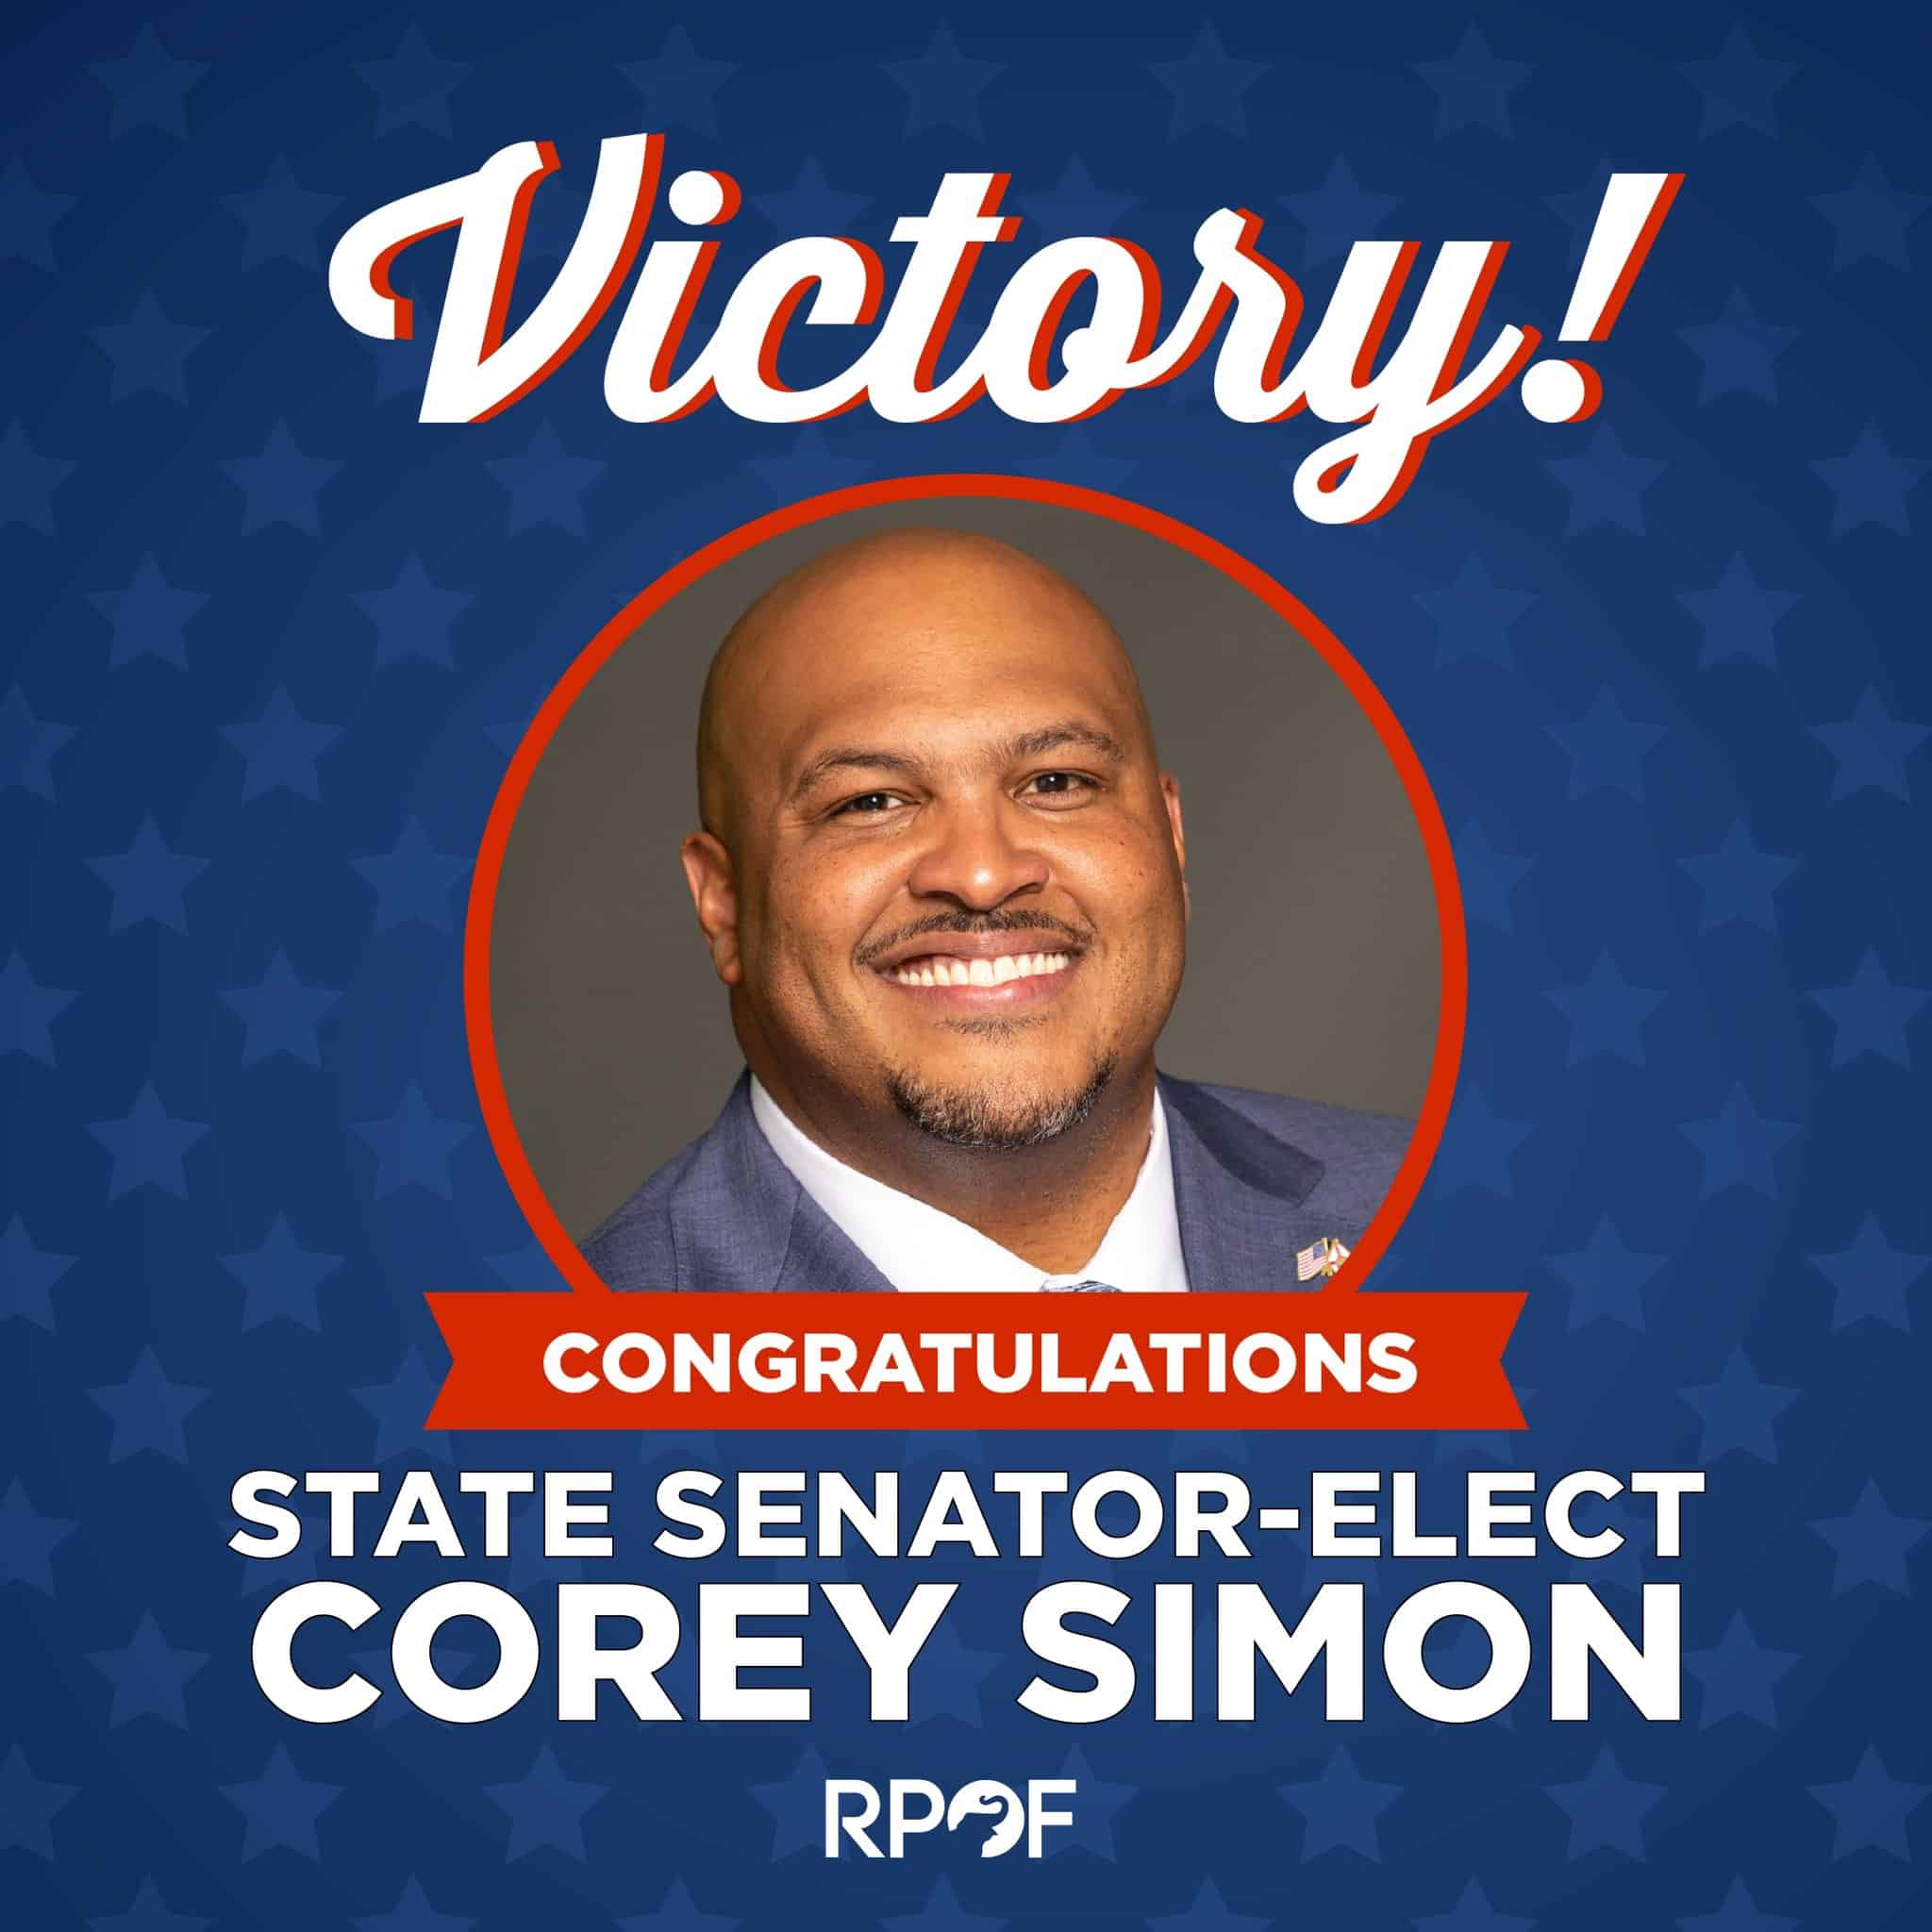 Former Eagle Corey Simon is now a Florida State Senator